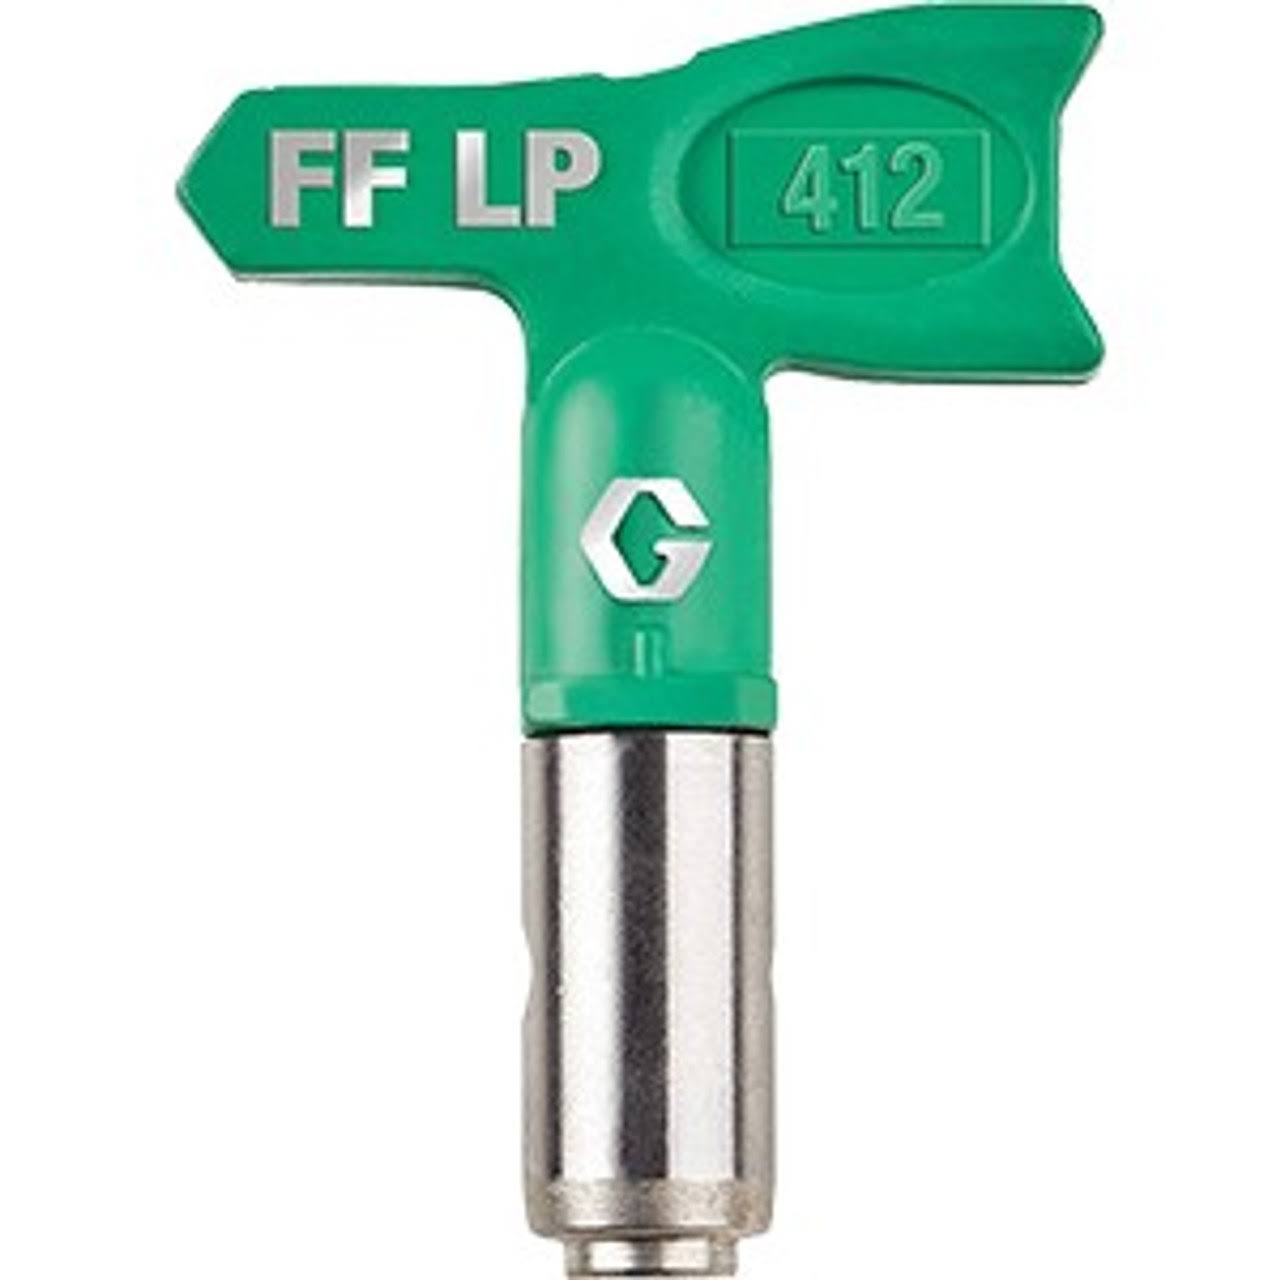 Graco Fflp412 Airless Spray Gun Tip - 0.012" Tip Size